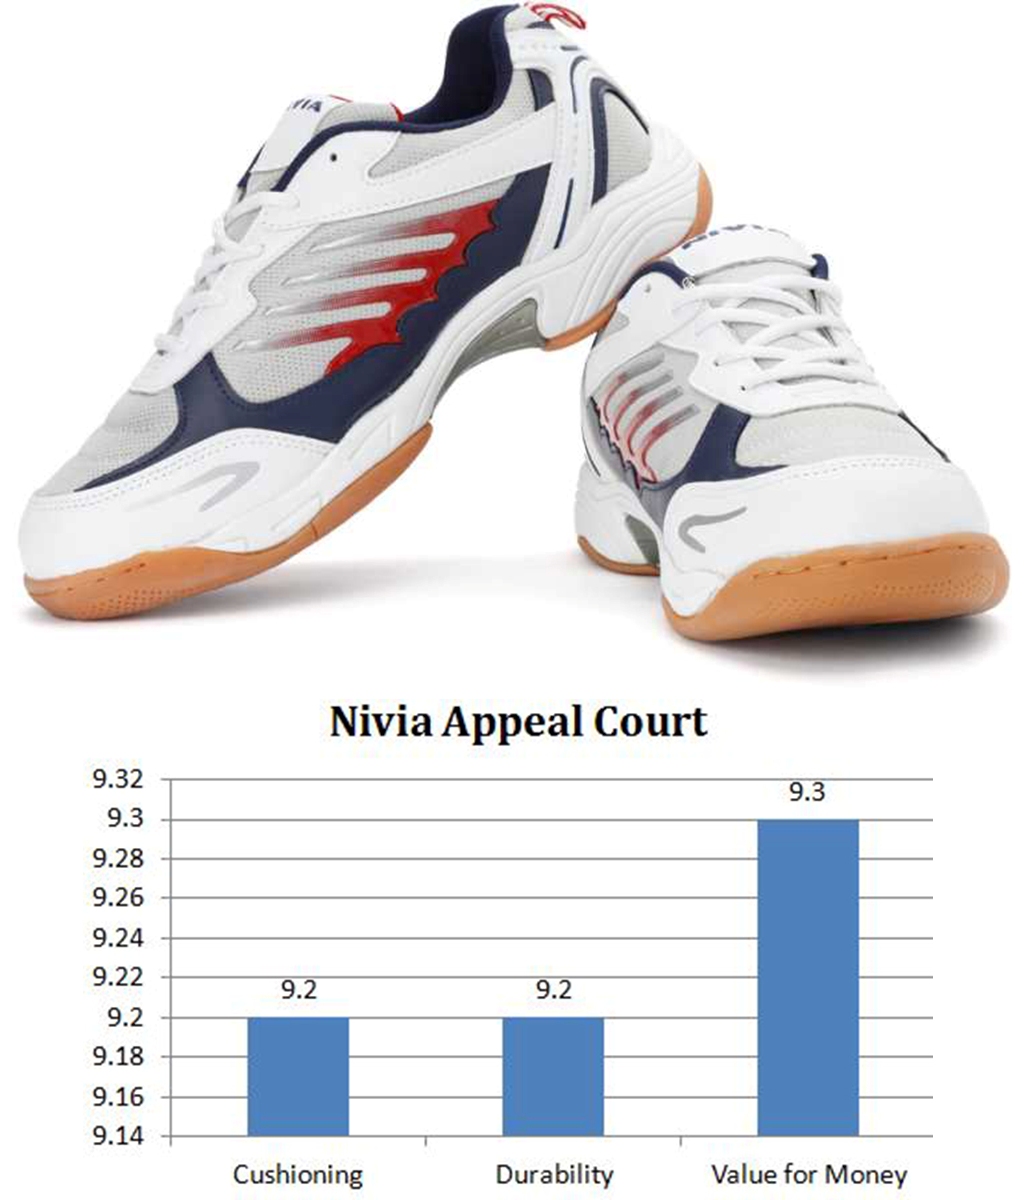 Nivia_Appeal_Court_Badminton_Shoes_Khelmart